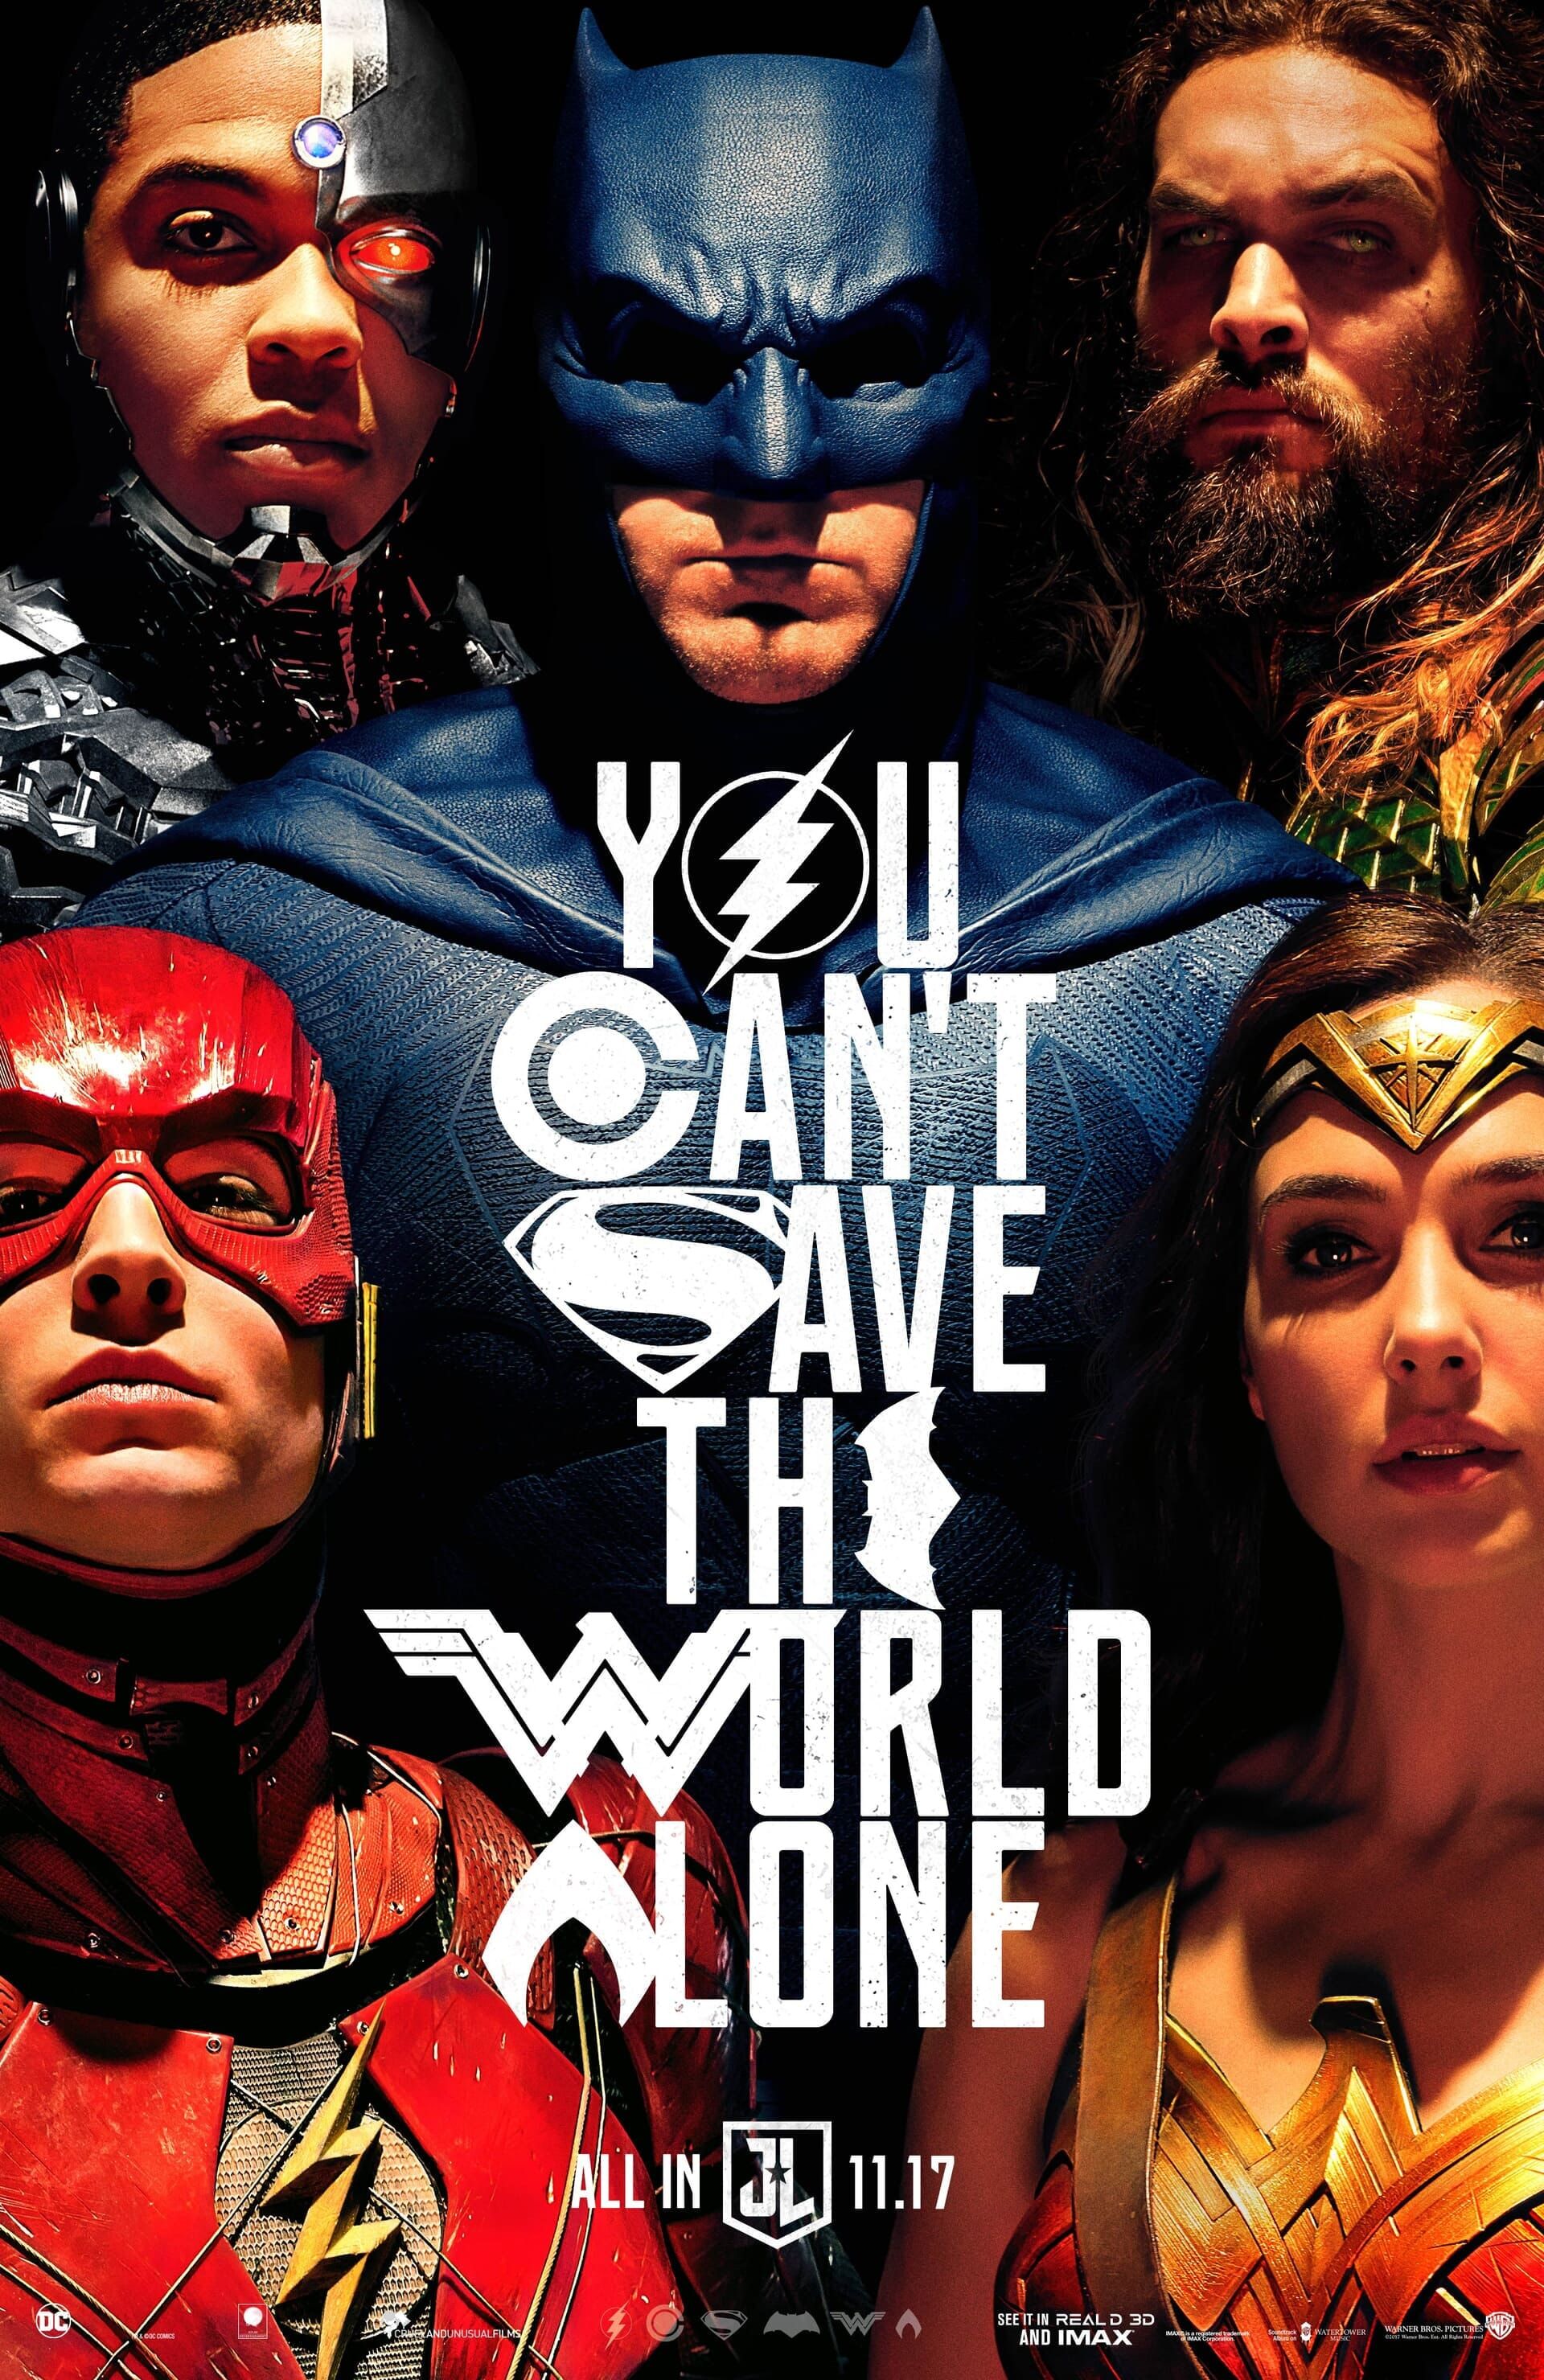 Justice League lost original unreleased Zack Snyder cut of film